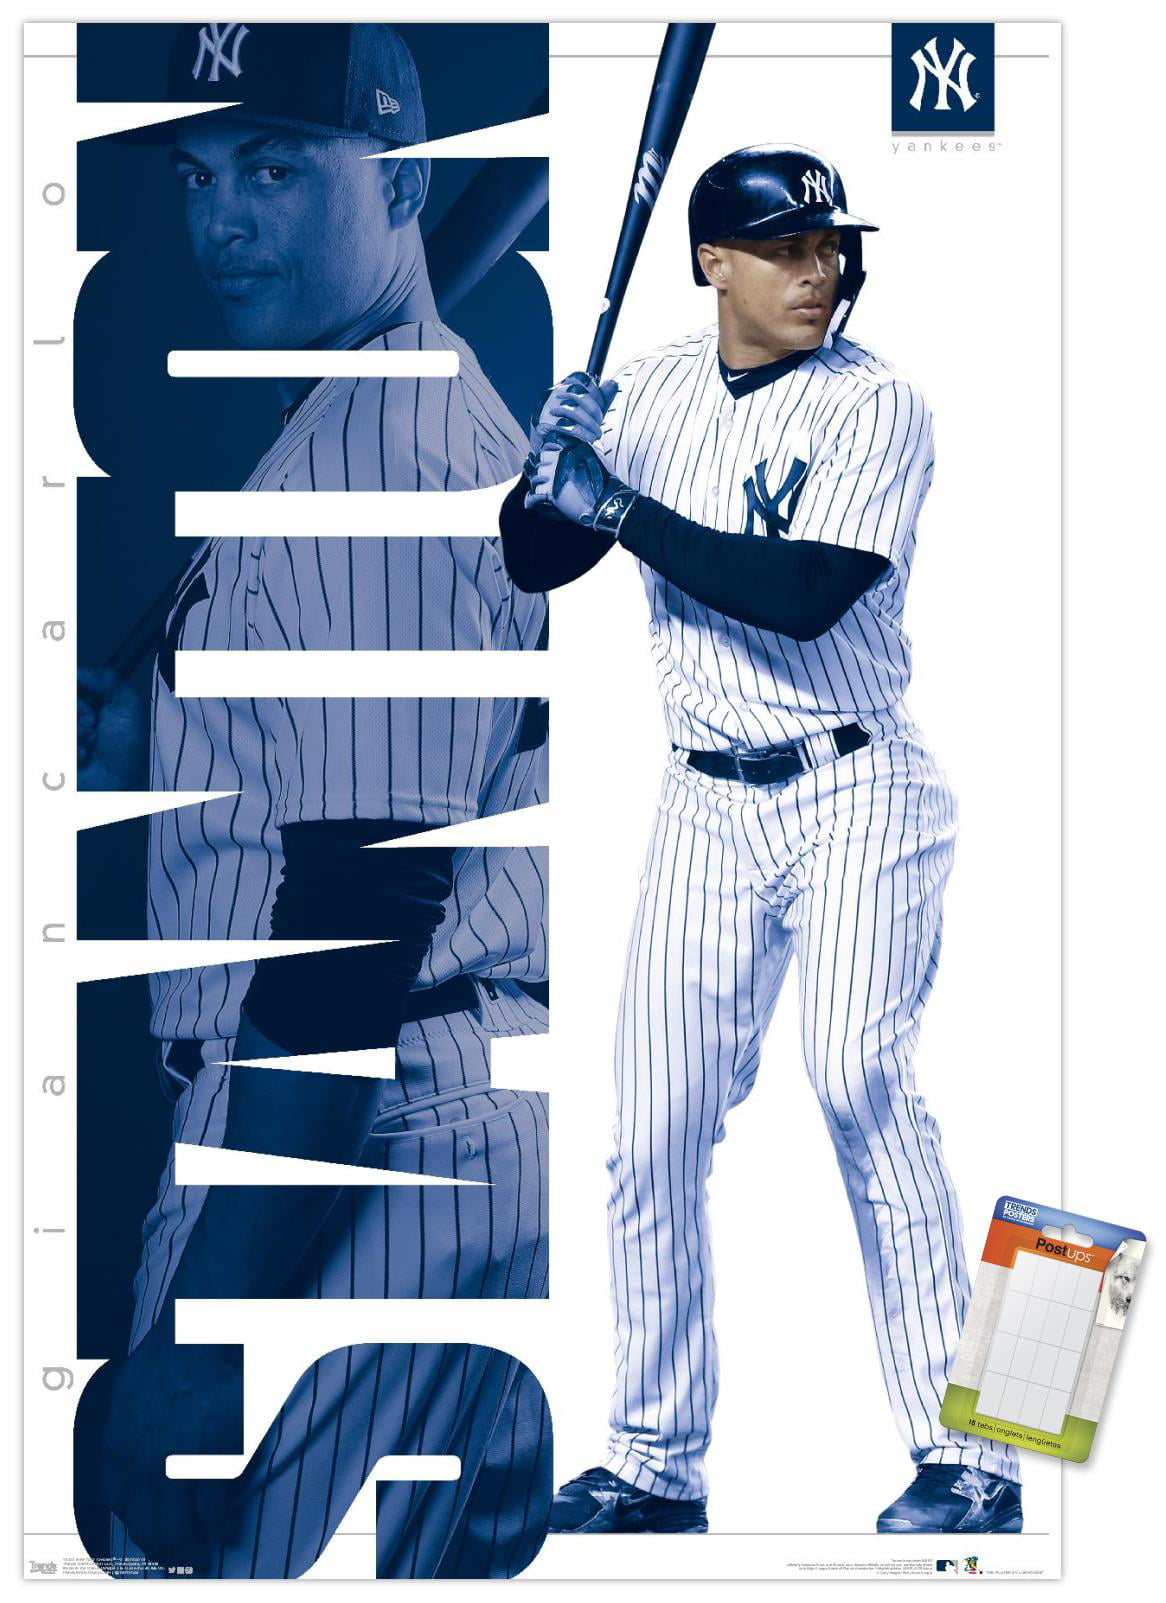 New York Yankees - Vintage MLB Baseball Photo - Sports Fan 11x14 Poster Print